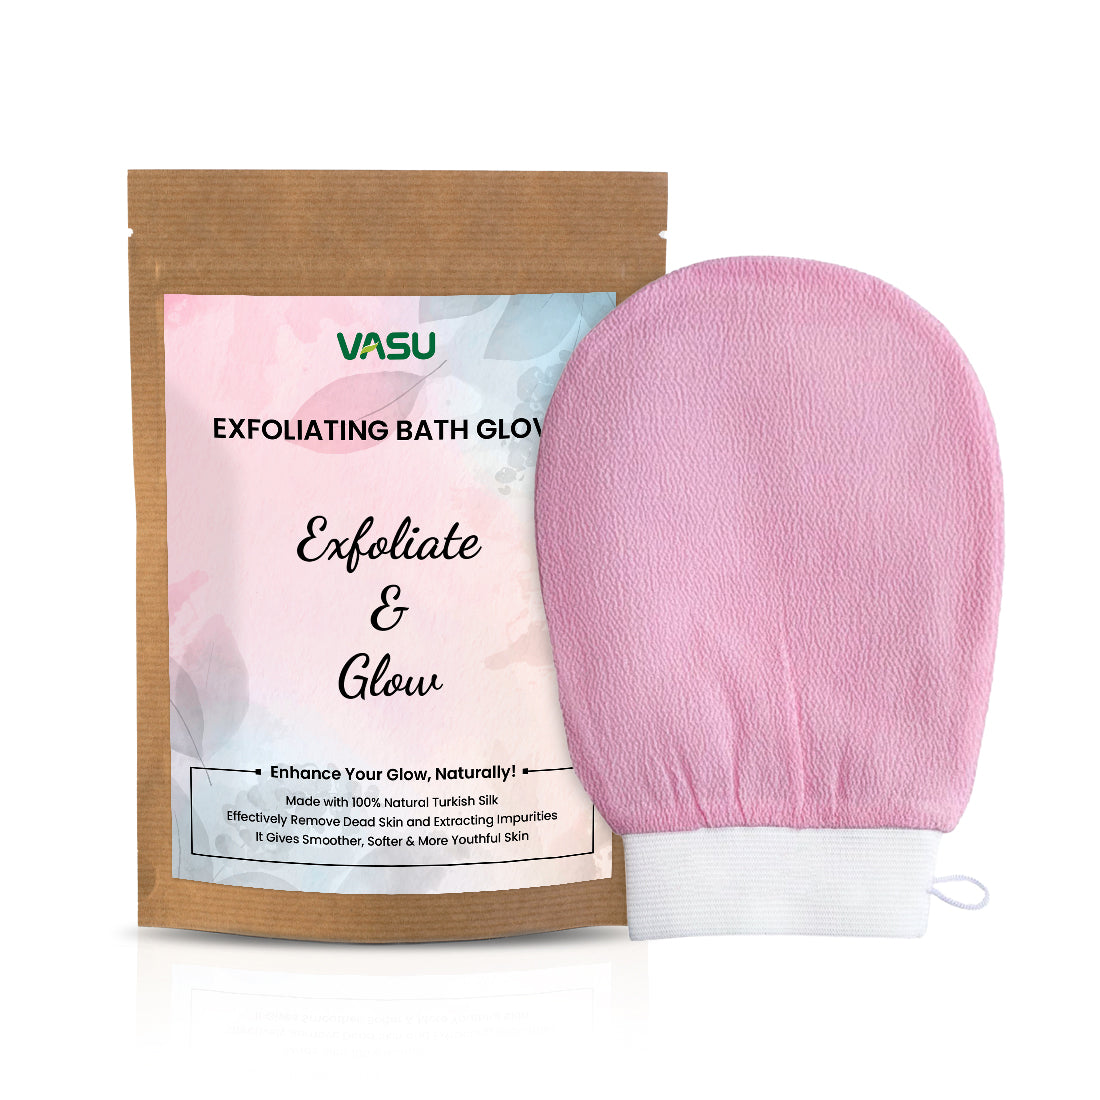 Turkish Silk Exfoliating Glove Mitts (Pink) Hammam Body Scrub Magic Peeling Glove - Removes Dirt, Bumps, Dead Skin Cells & De Tan Skin, Deep Cleansing - VasuStore